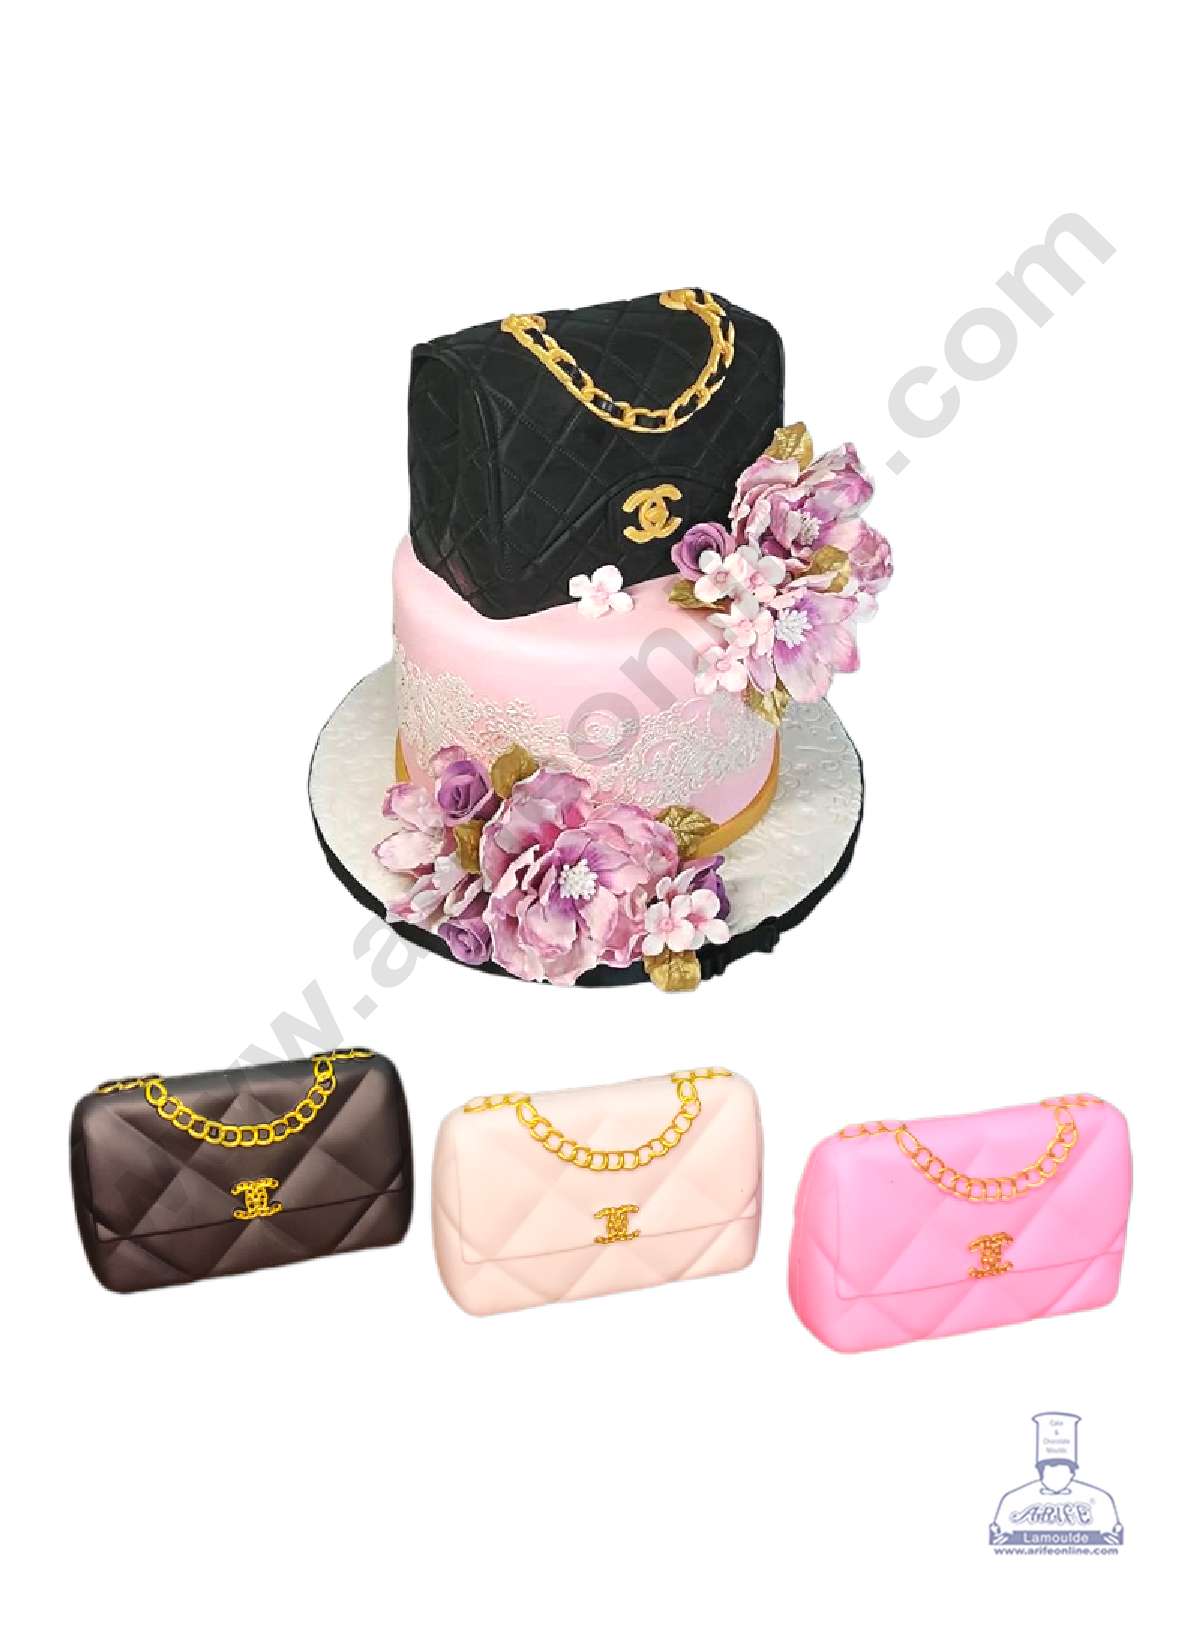 Red Chanel Purse Cake | Fashion cakes, Chanel cake, Handbag cakes